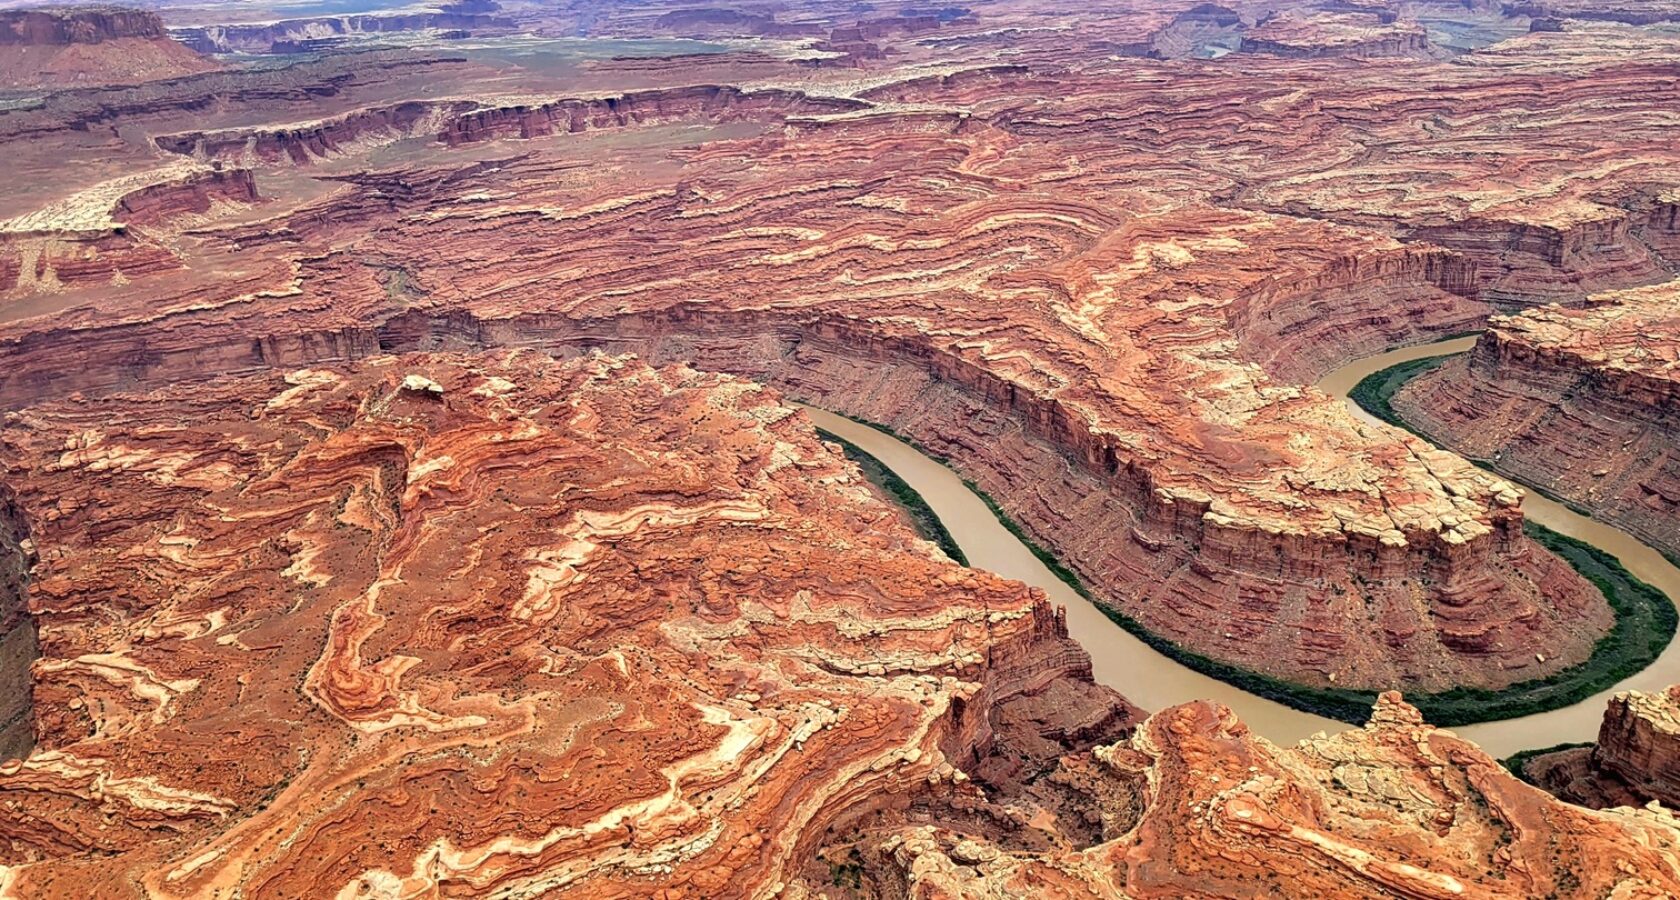 Ariel view of the Colorado River winding through a vibrant sandstone canyon